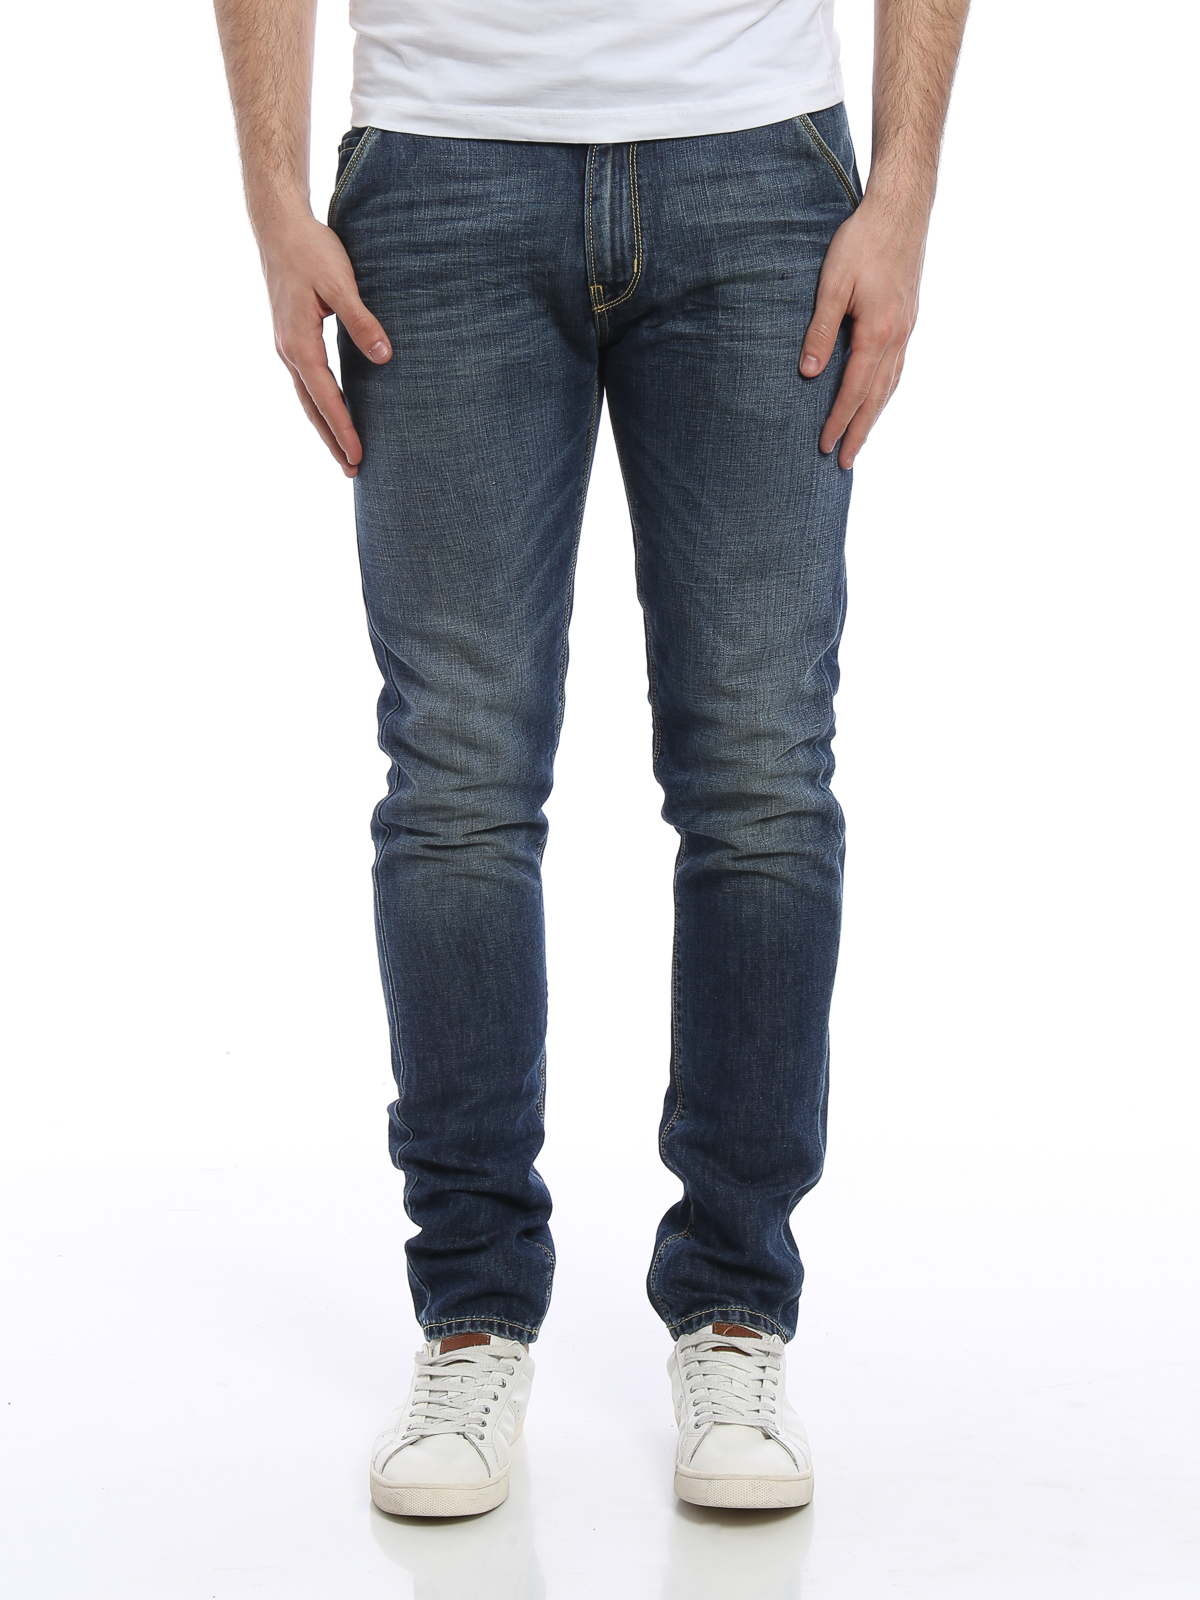 linen blend jeans